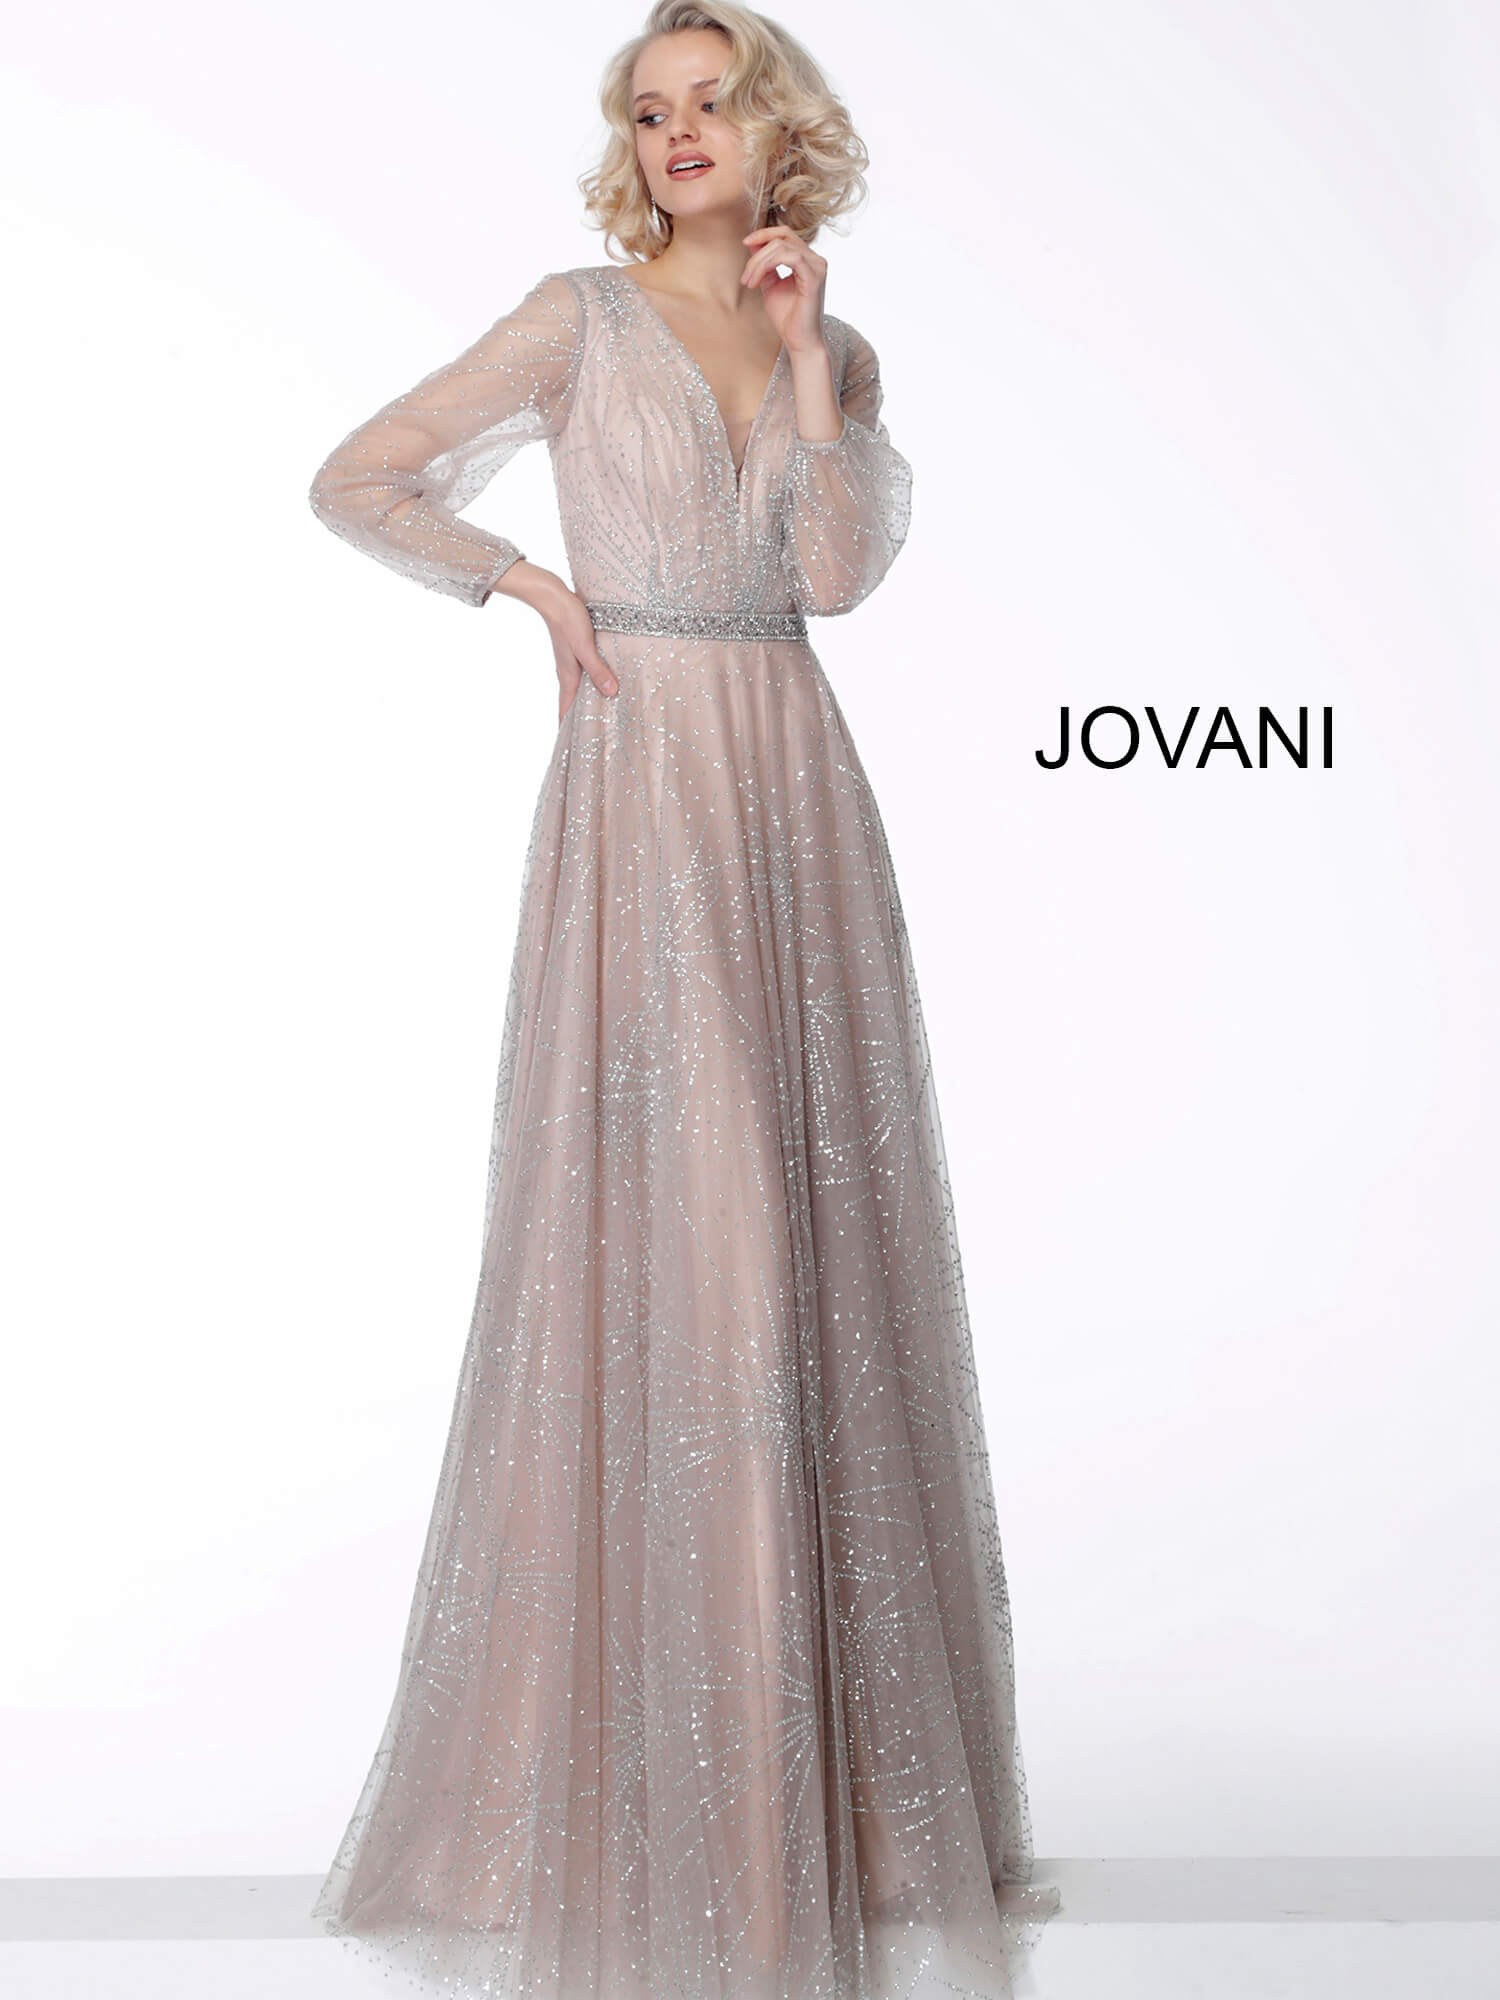 Jovani 65658 |Nude Glitter Beaded Belt 